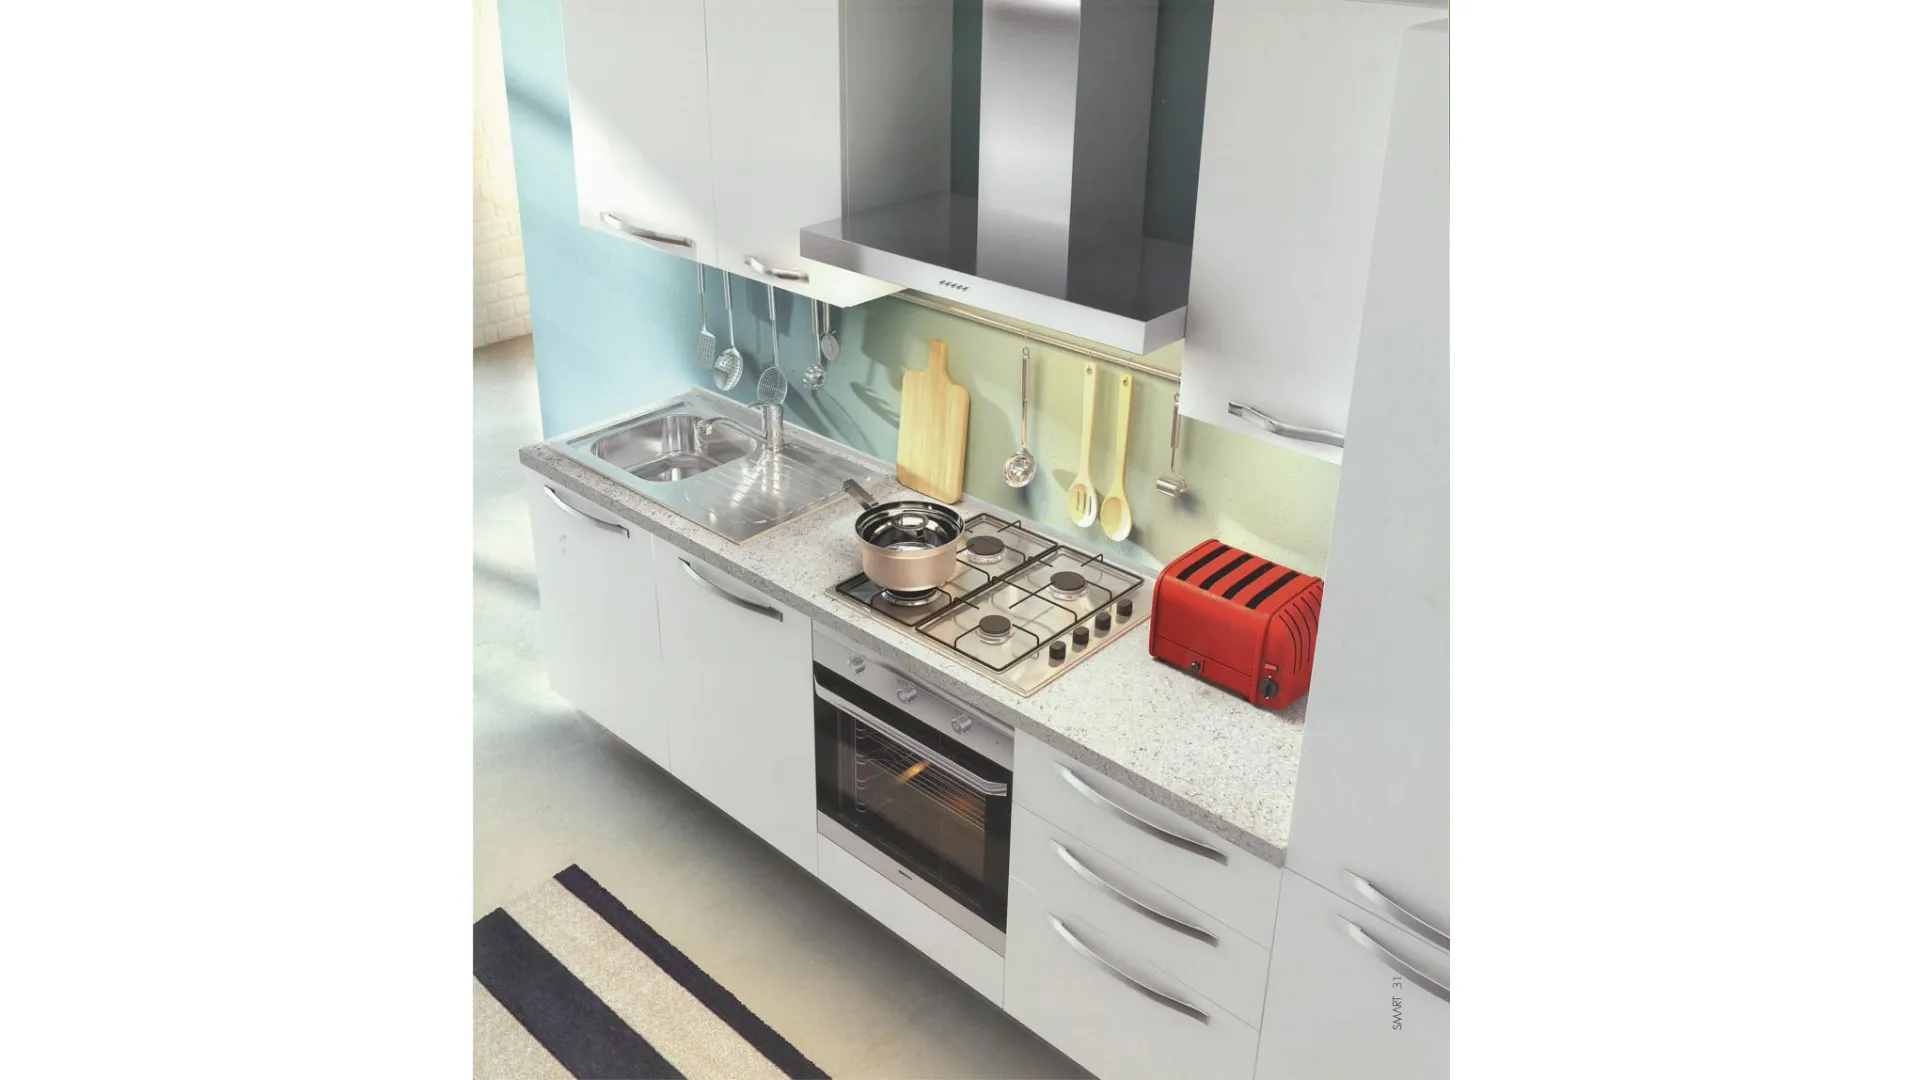 Modern kitchen complete with dishwasher with Ariston appliances.